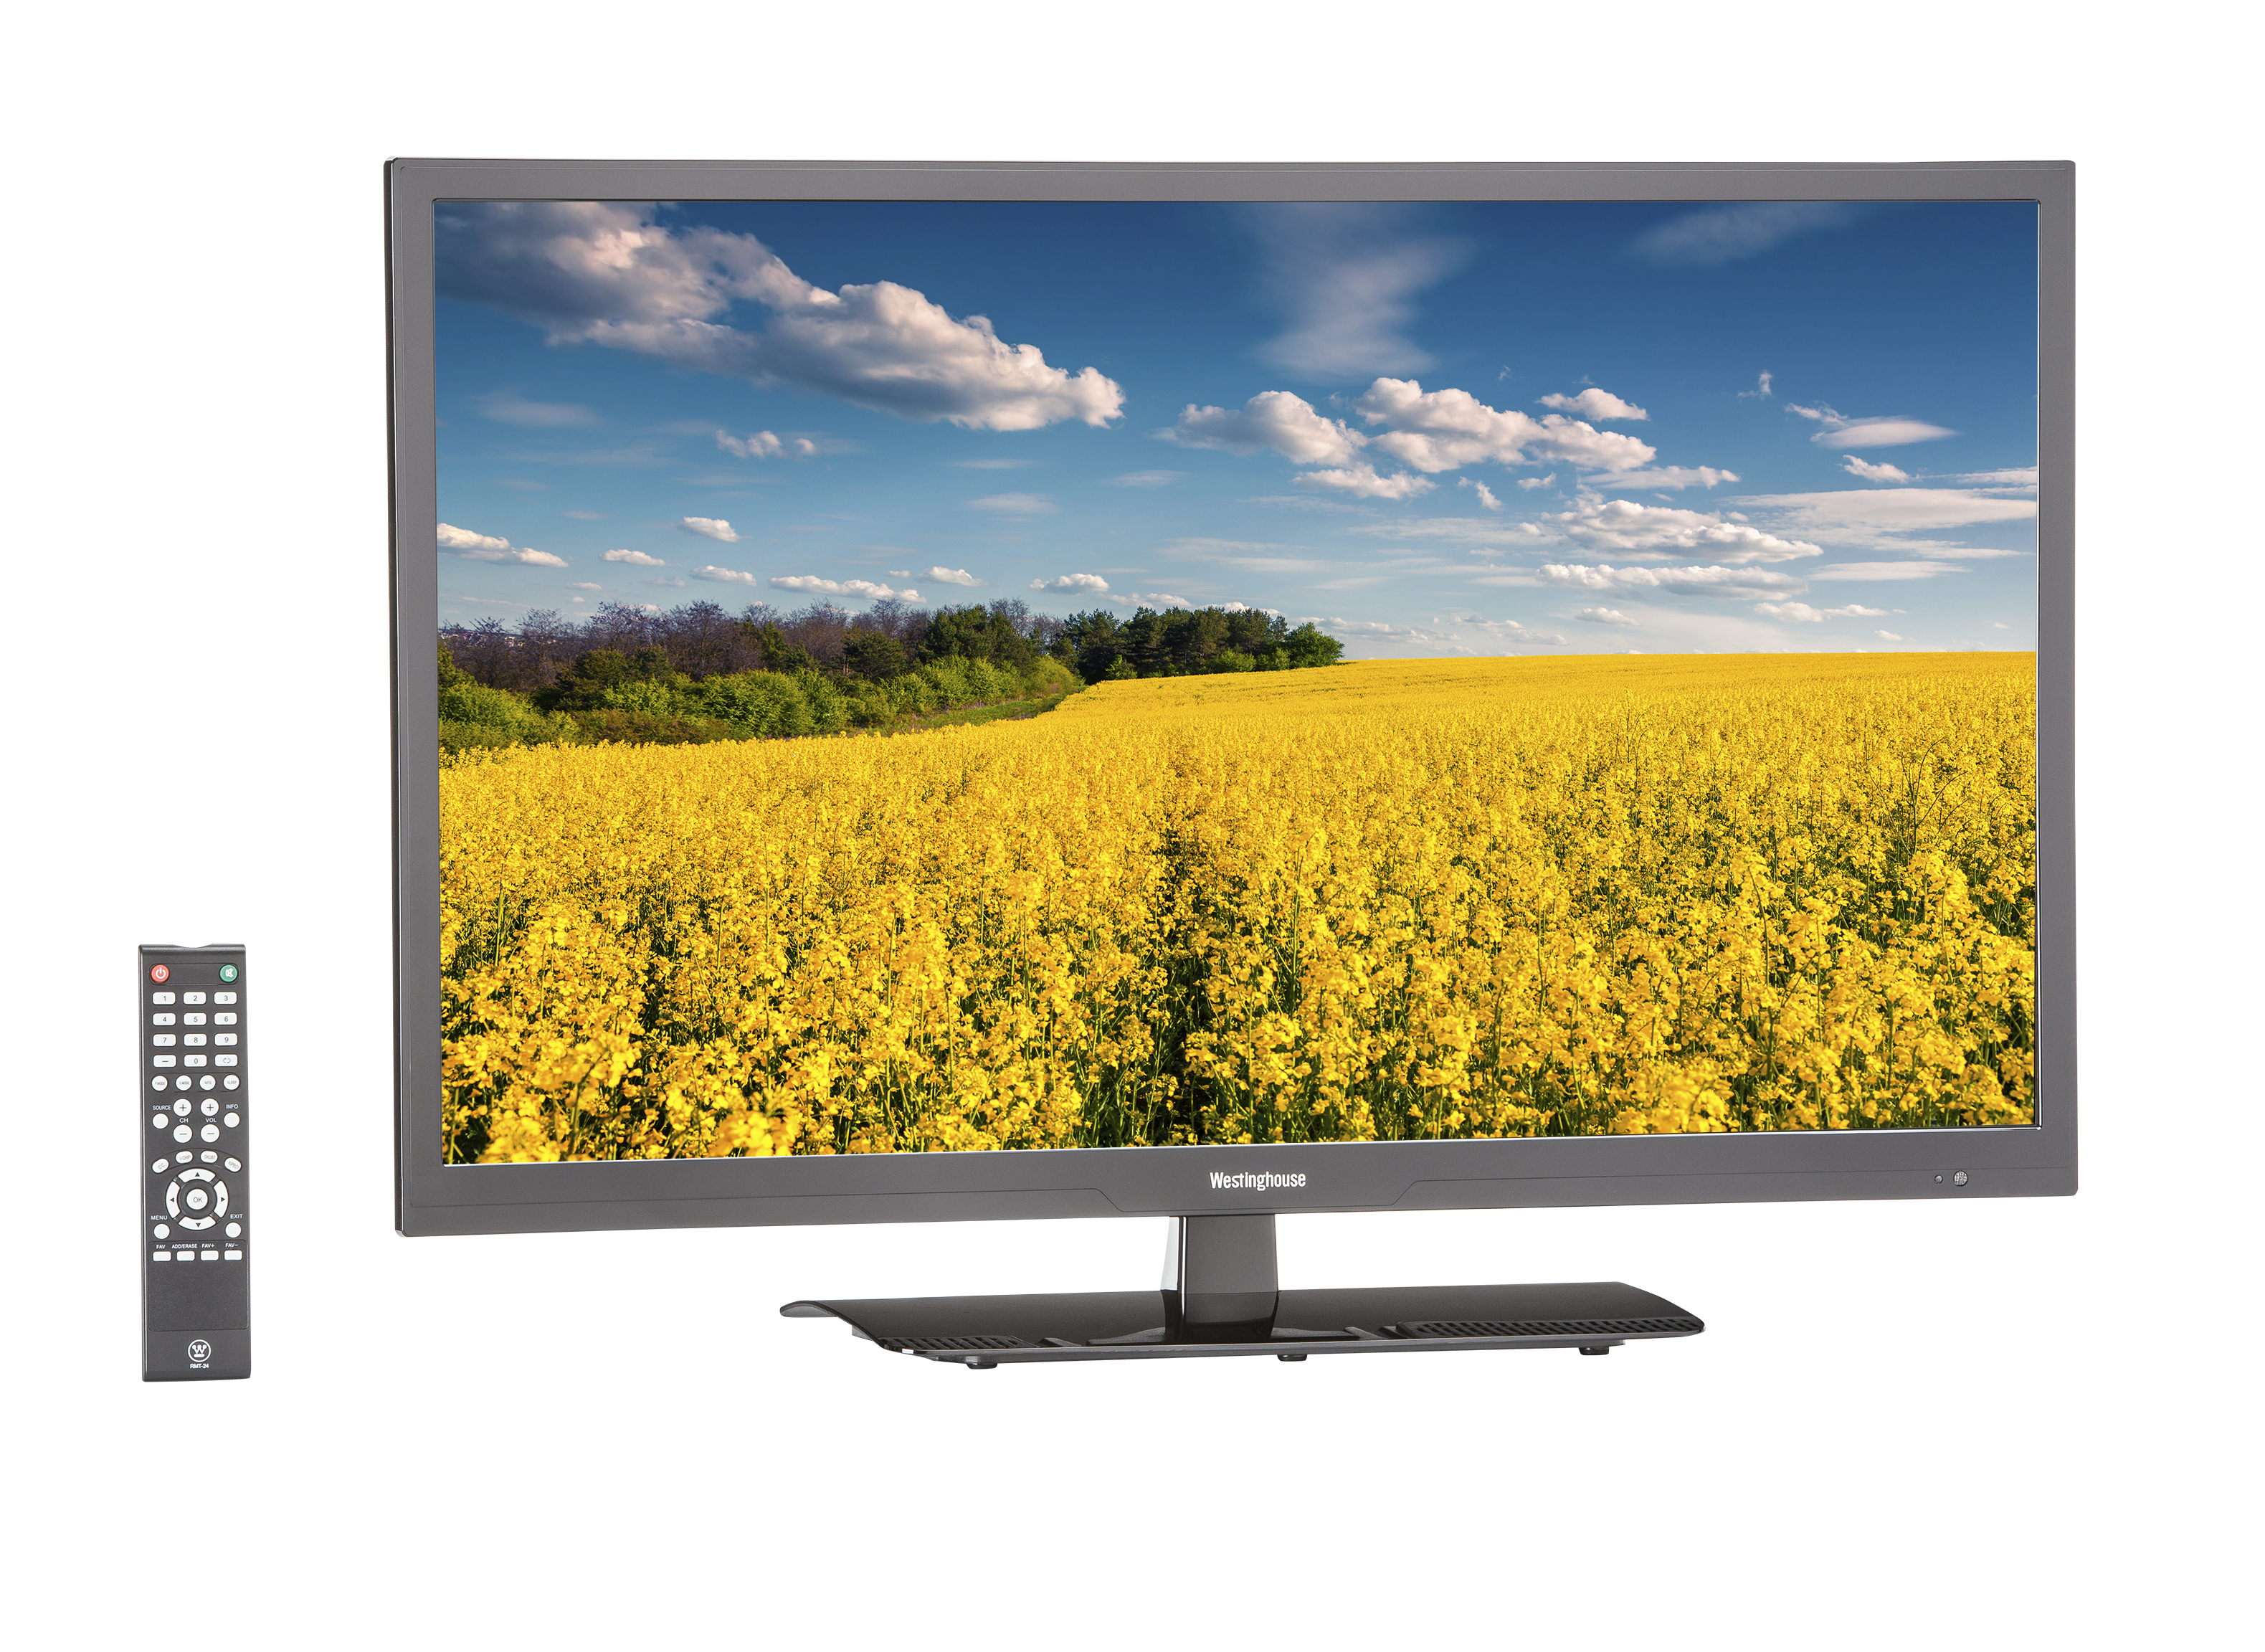 Westinghouse Televisor de 32 pulgadas, televisor de pantalla plana LED HD  720p con HDMI, USB, VGA y V-Chip Controles parentales, TV o monitor no